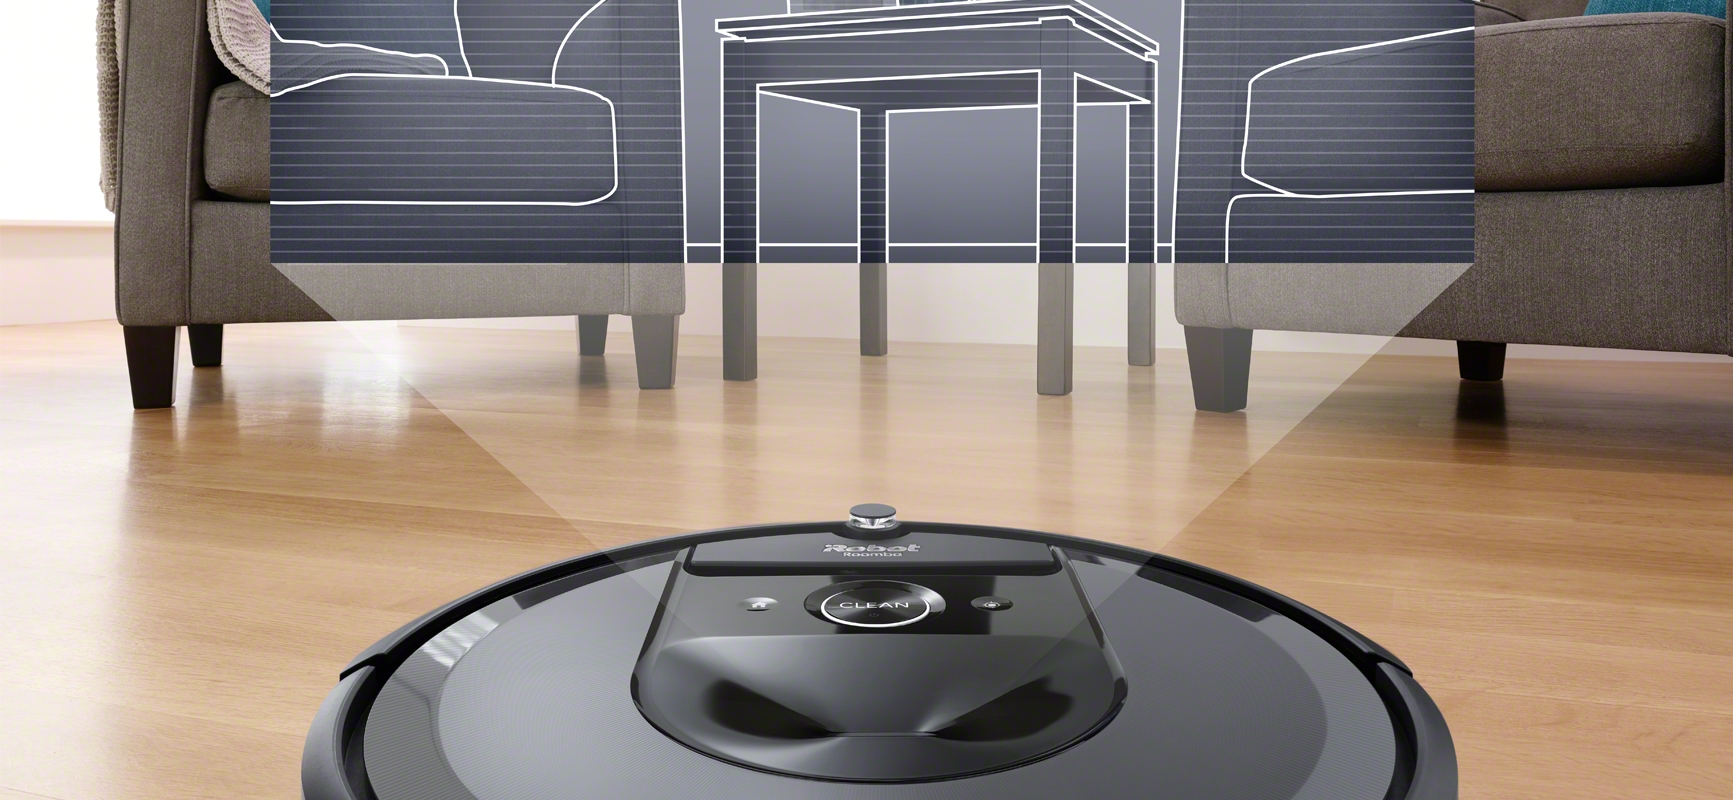 iRobot Roomba i7 vslam